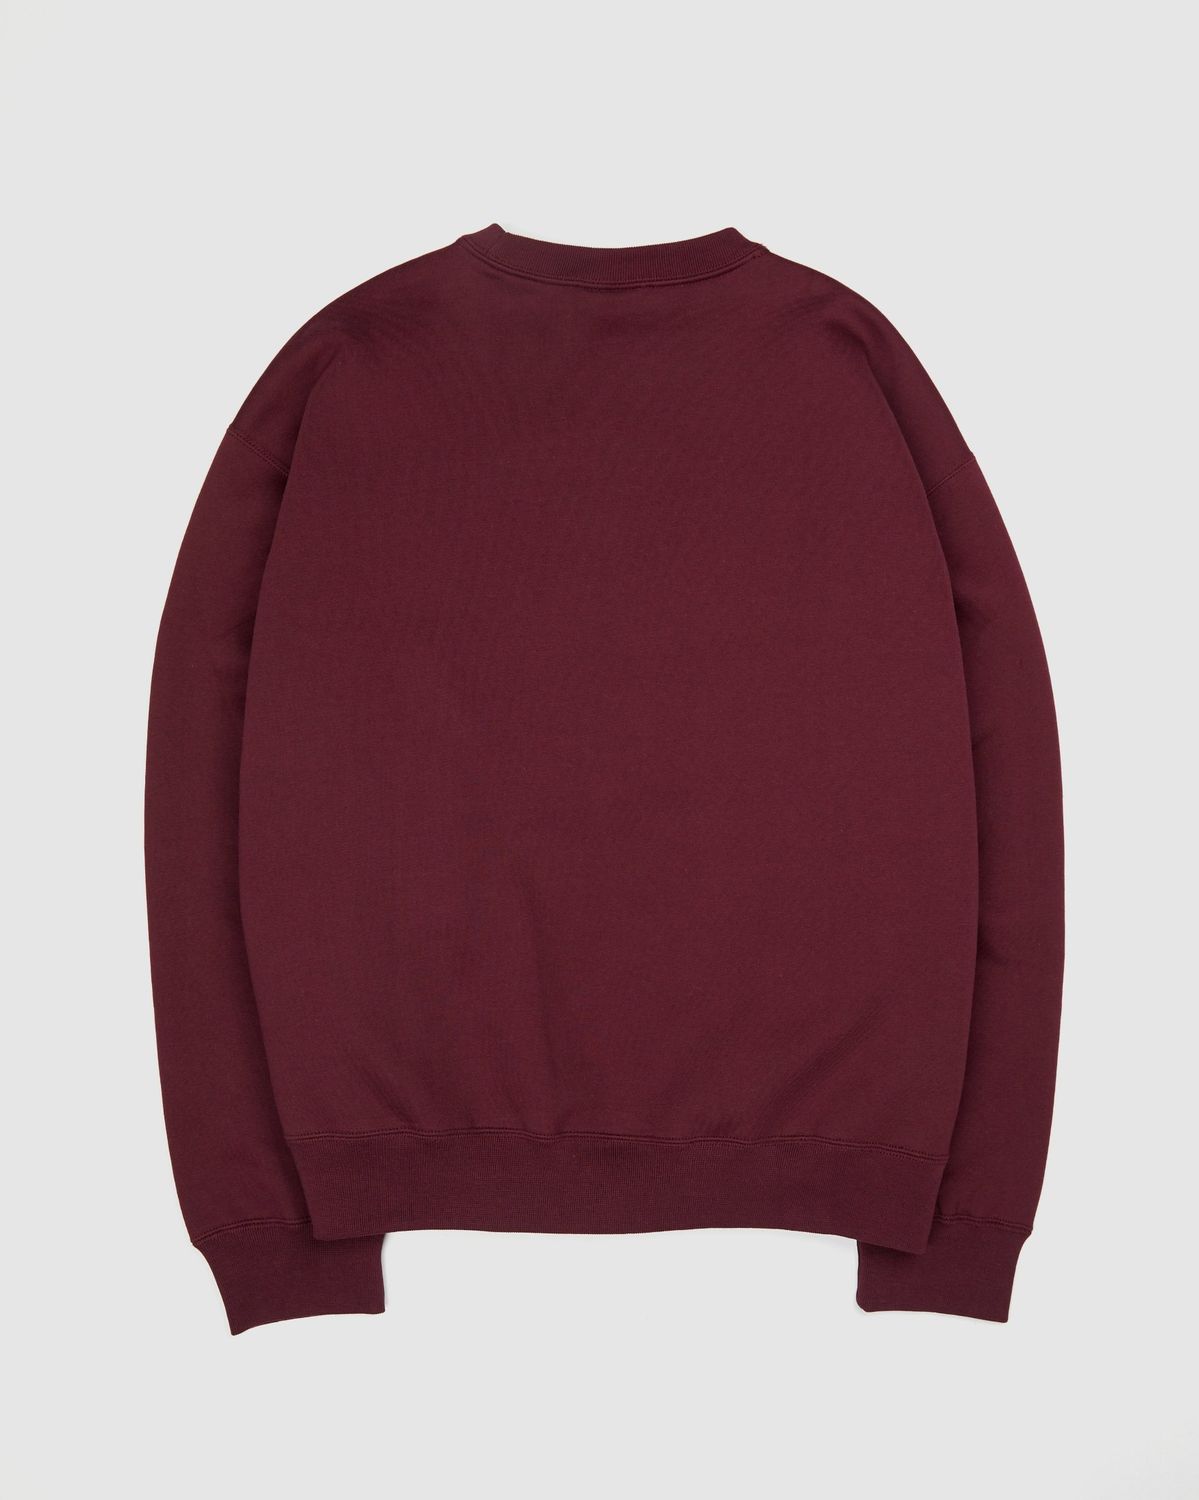 Nike ACG – Allover Print Crew Sweater Burgundy - Sweatshirts - Red - Image 2